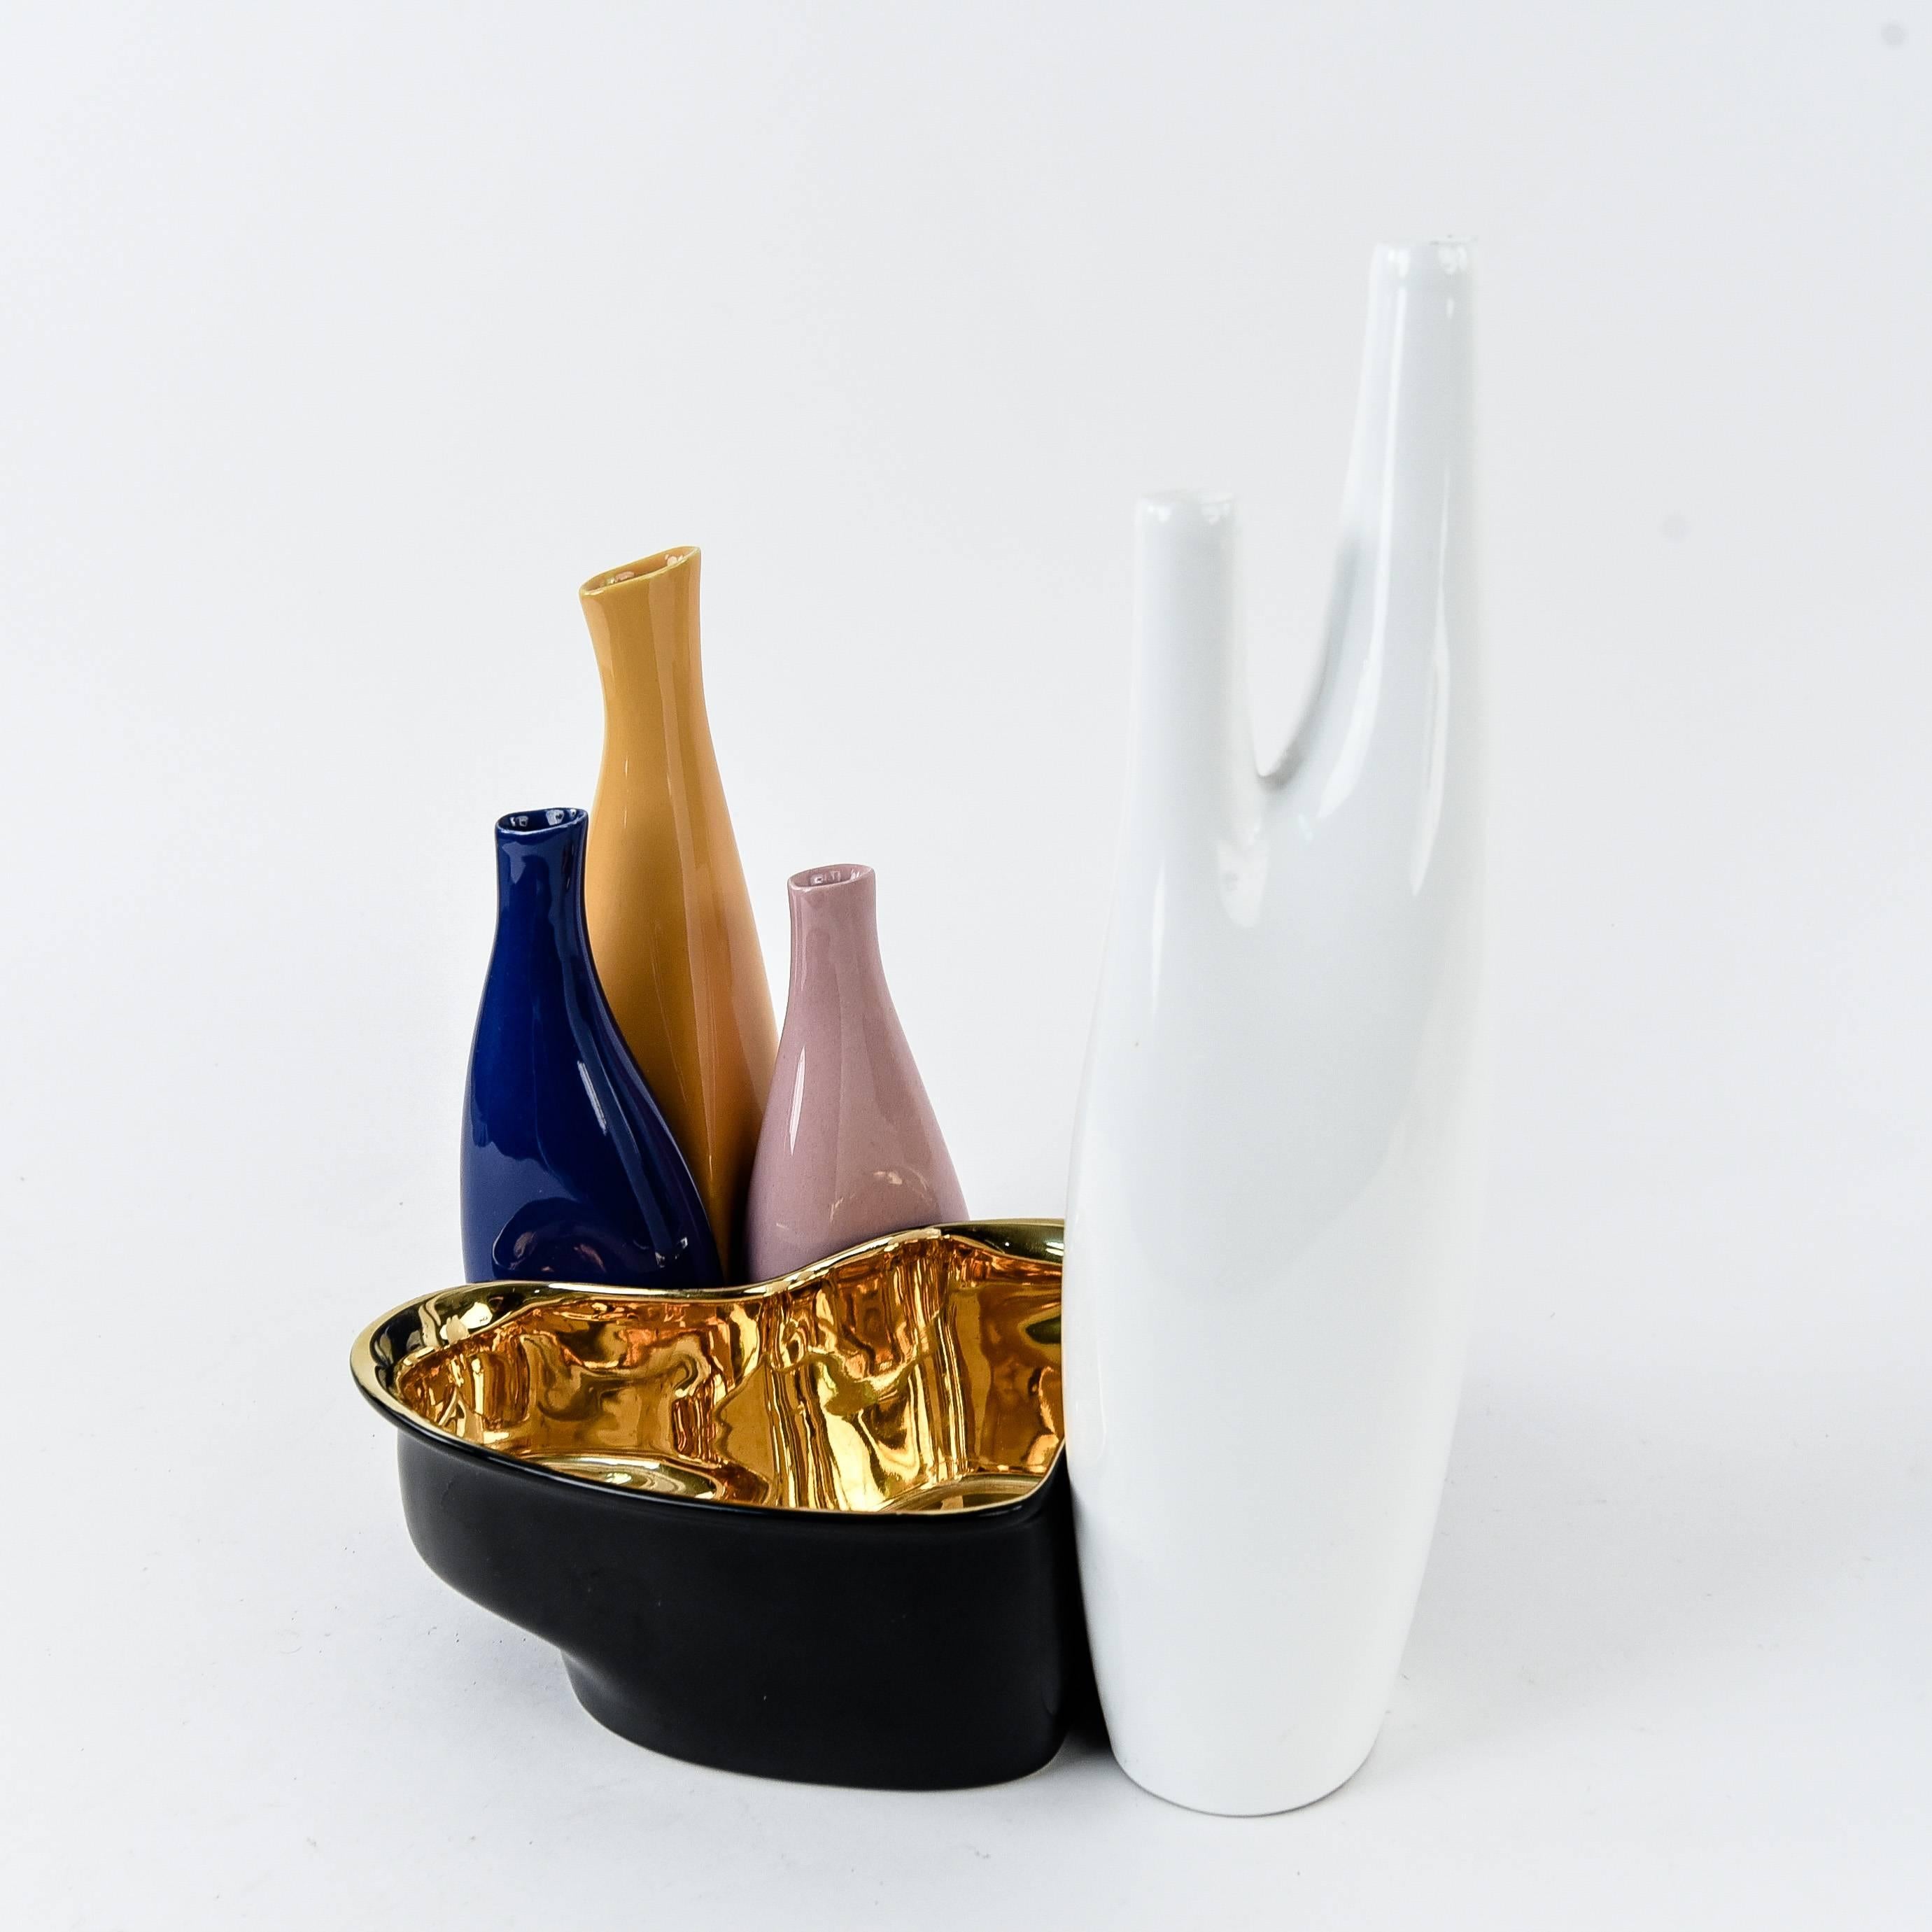 Ceramic Attributed to Studio Alchimia Bud Vase and Attached Dish